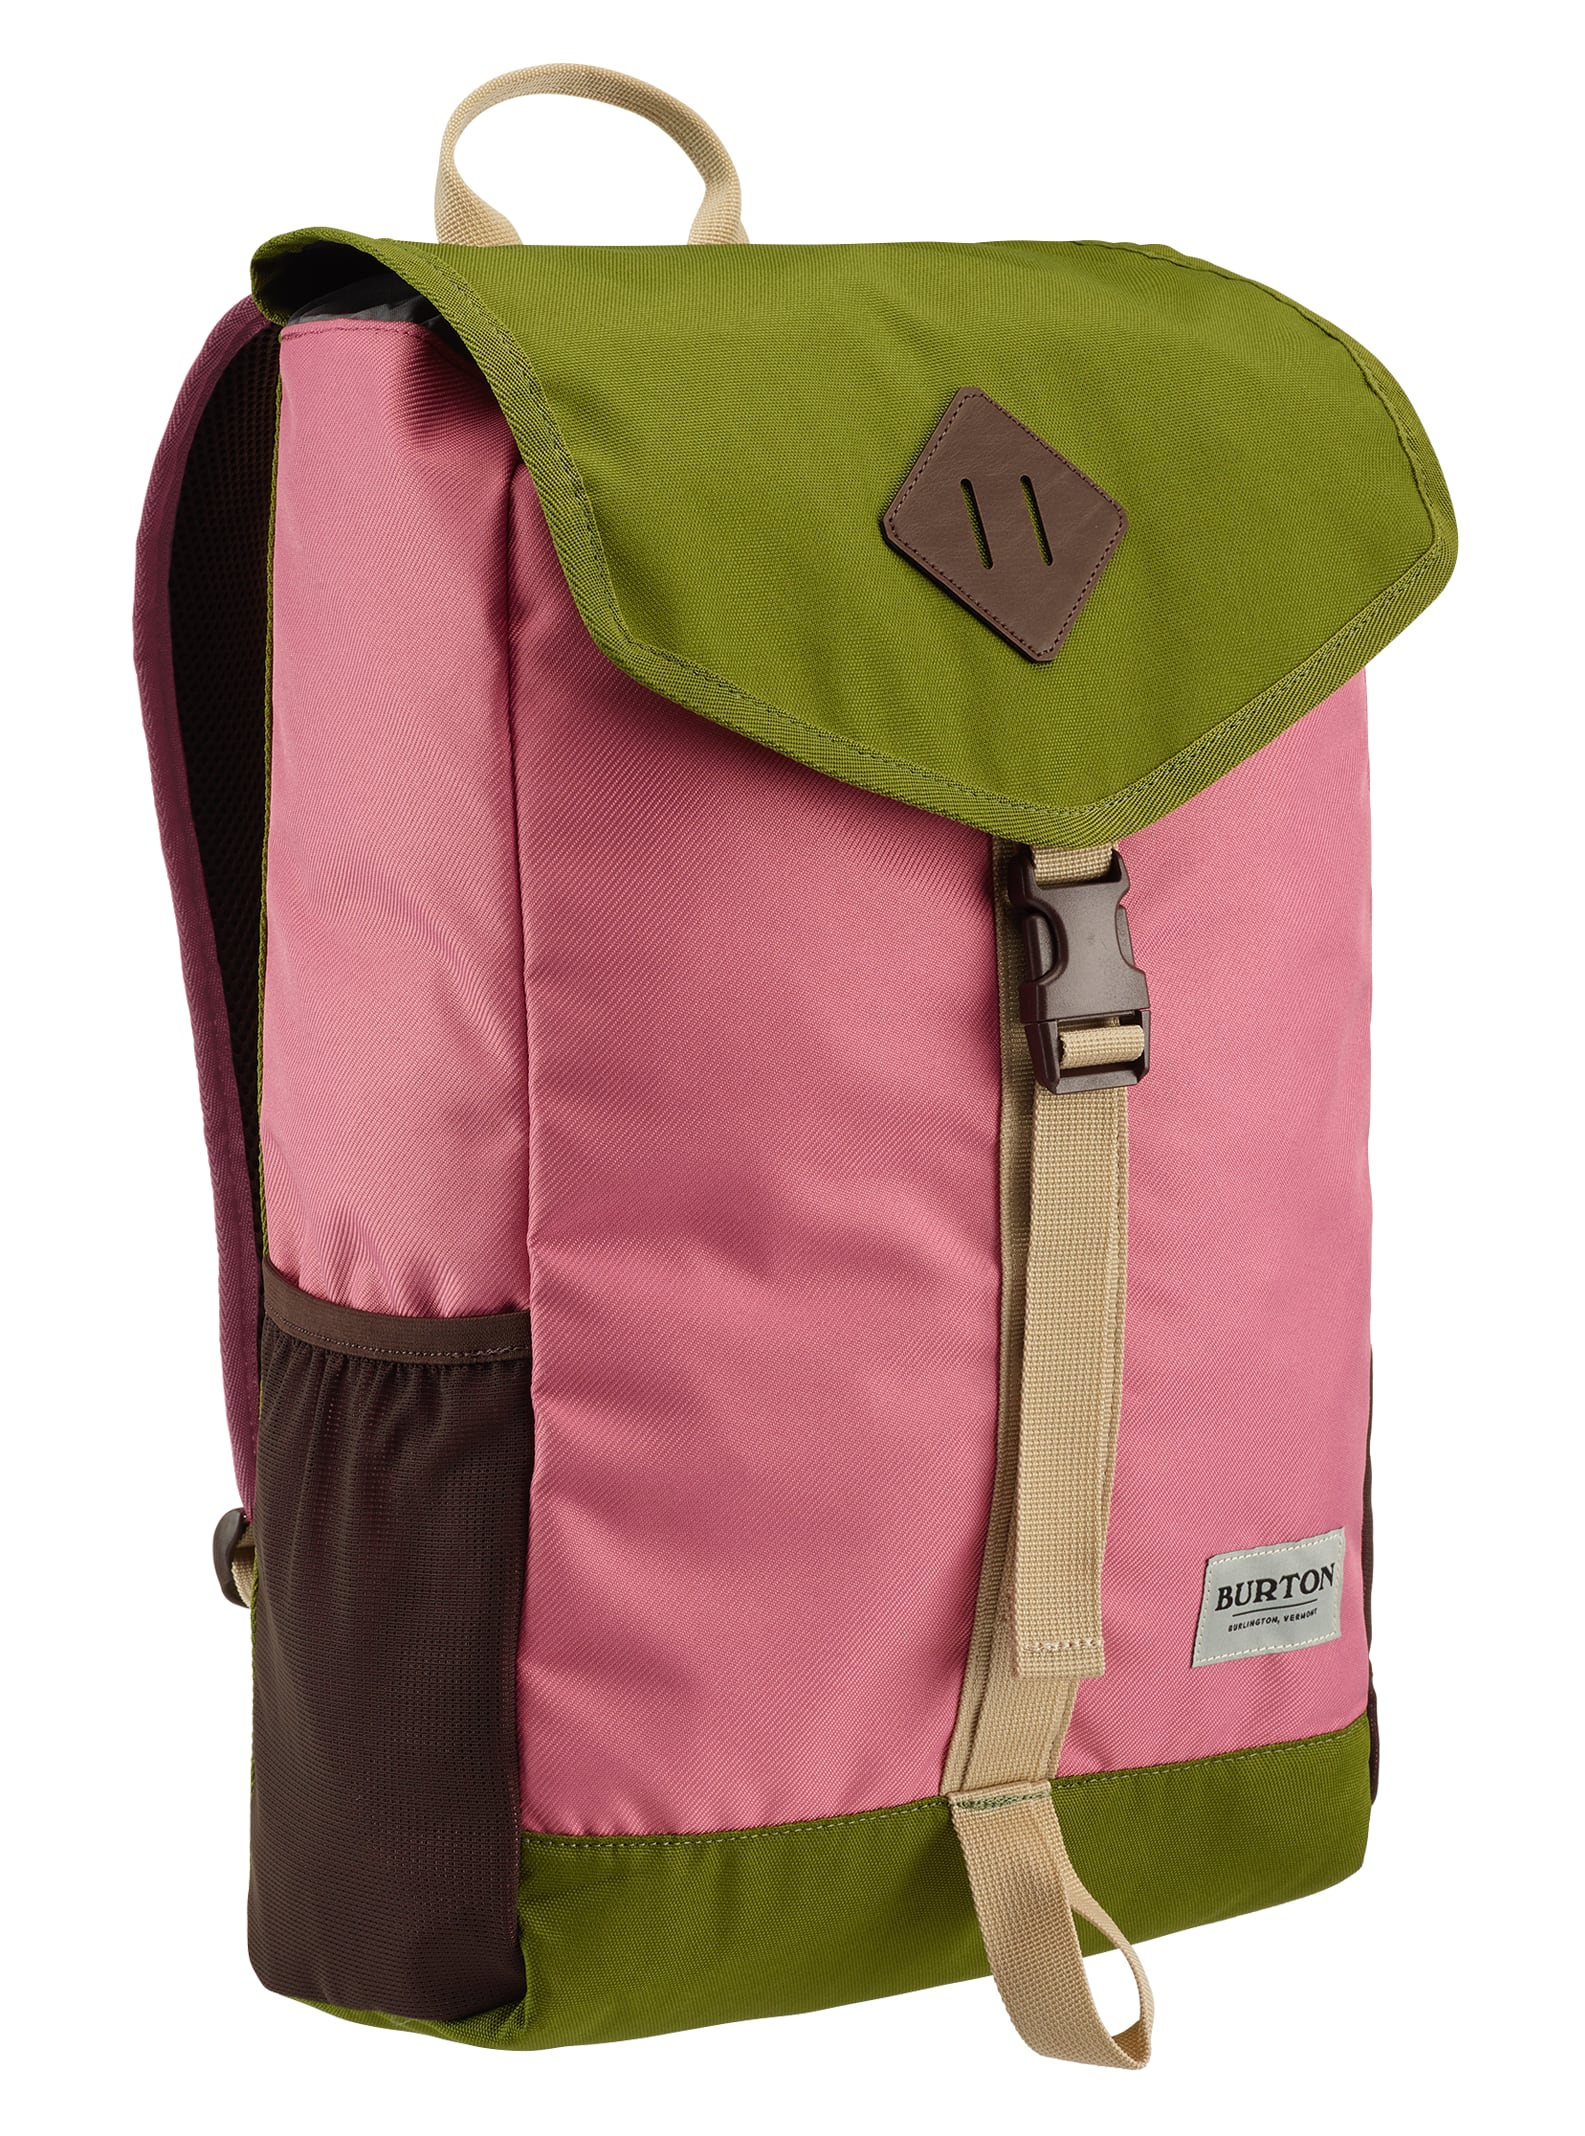 Burton Westfall 23L Backpack | Burton.com Spring 2020 US